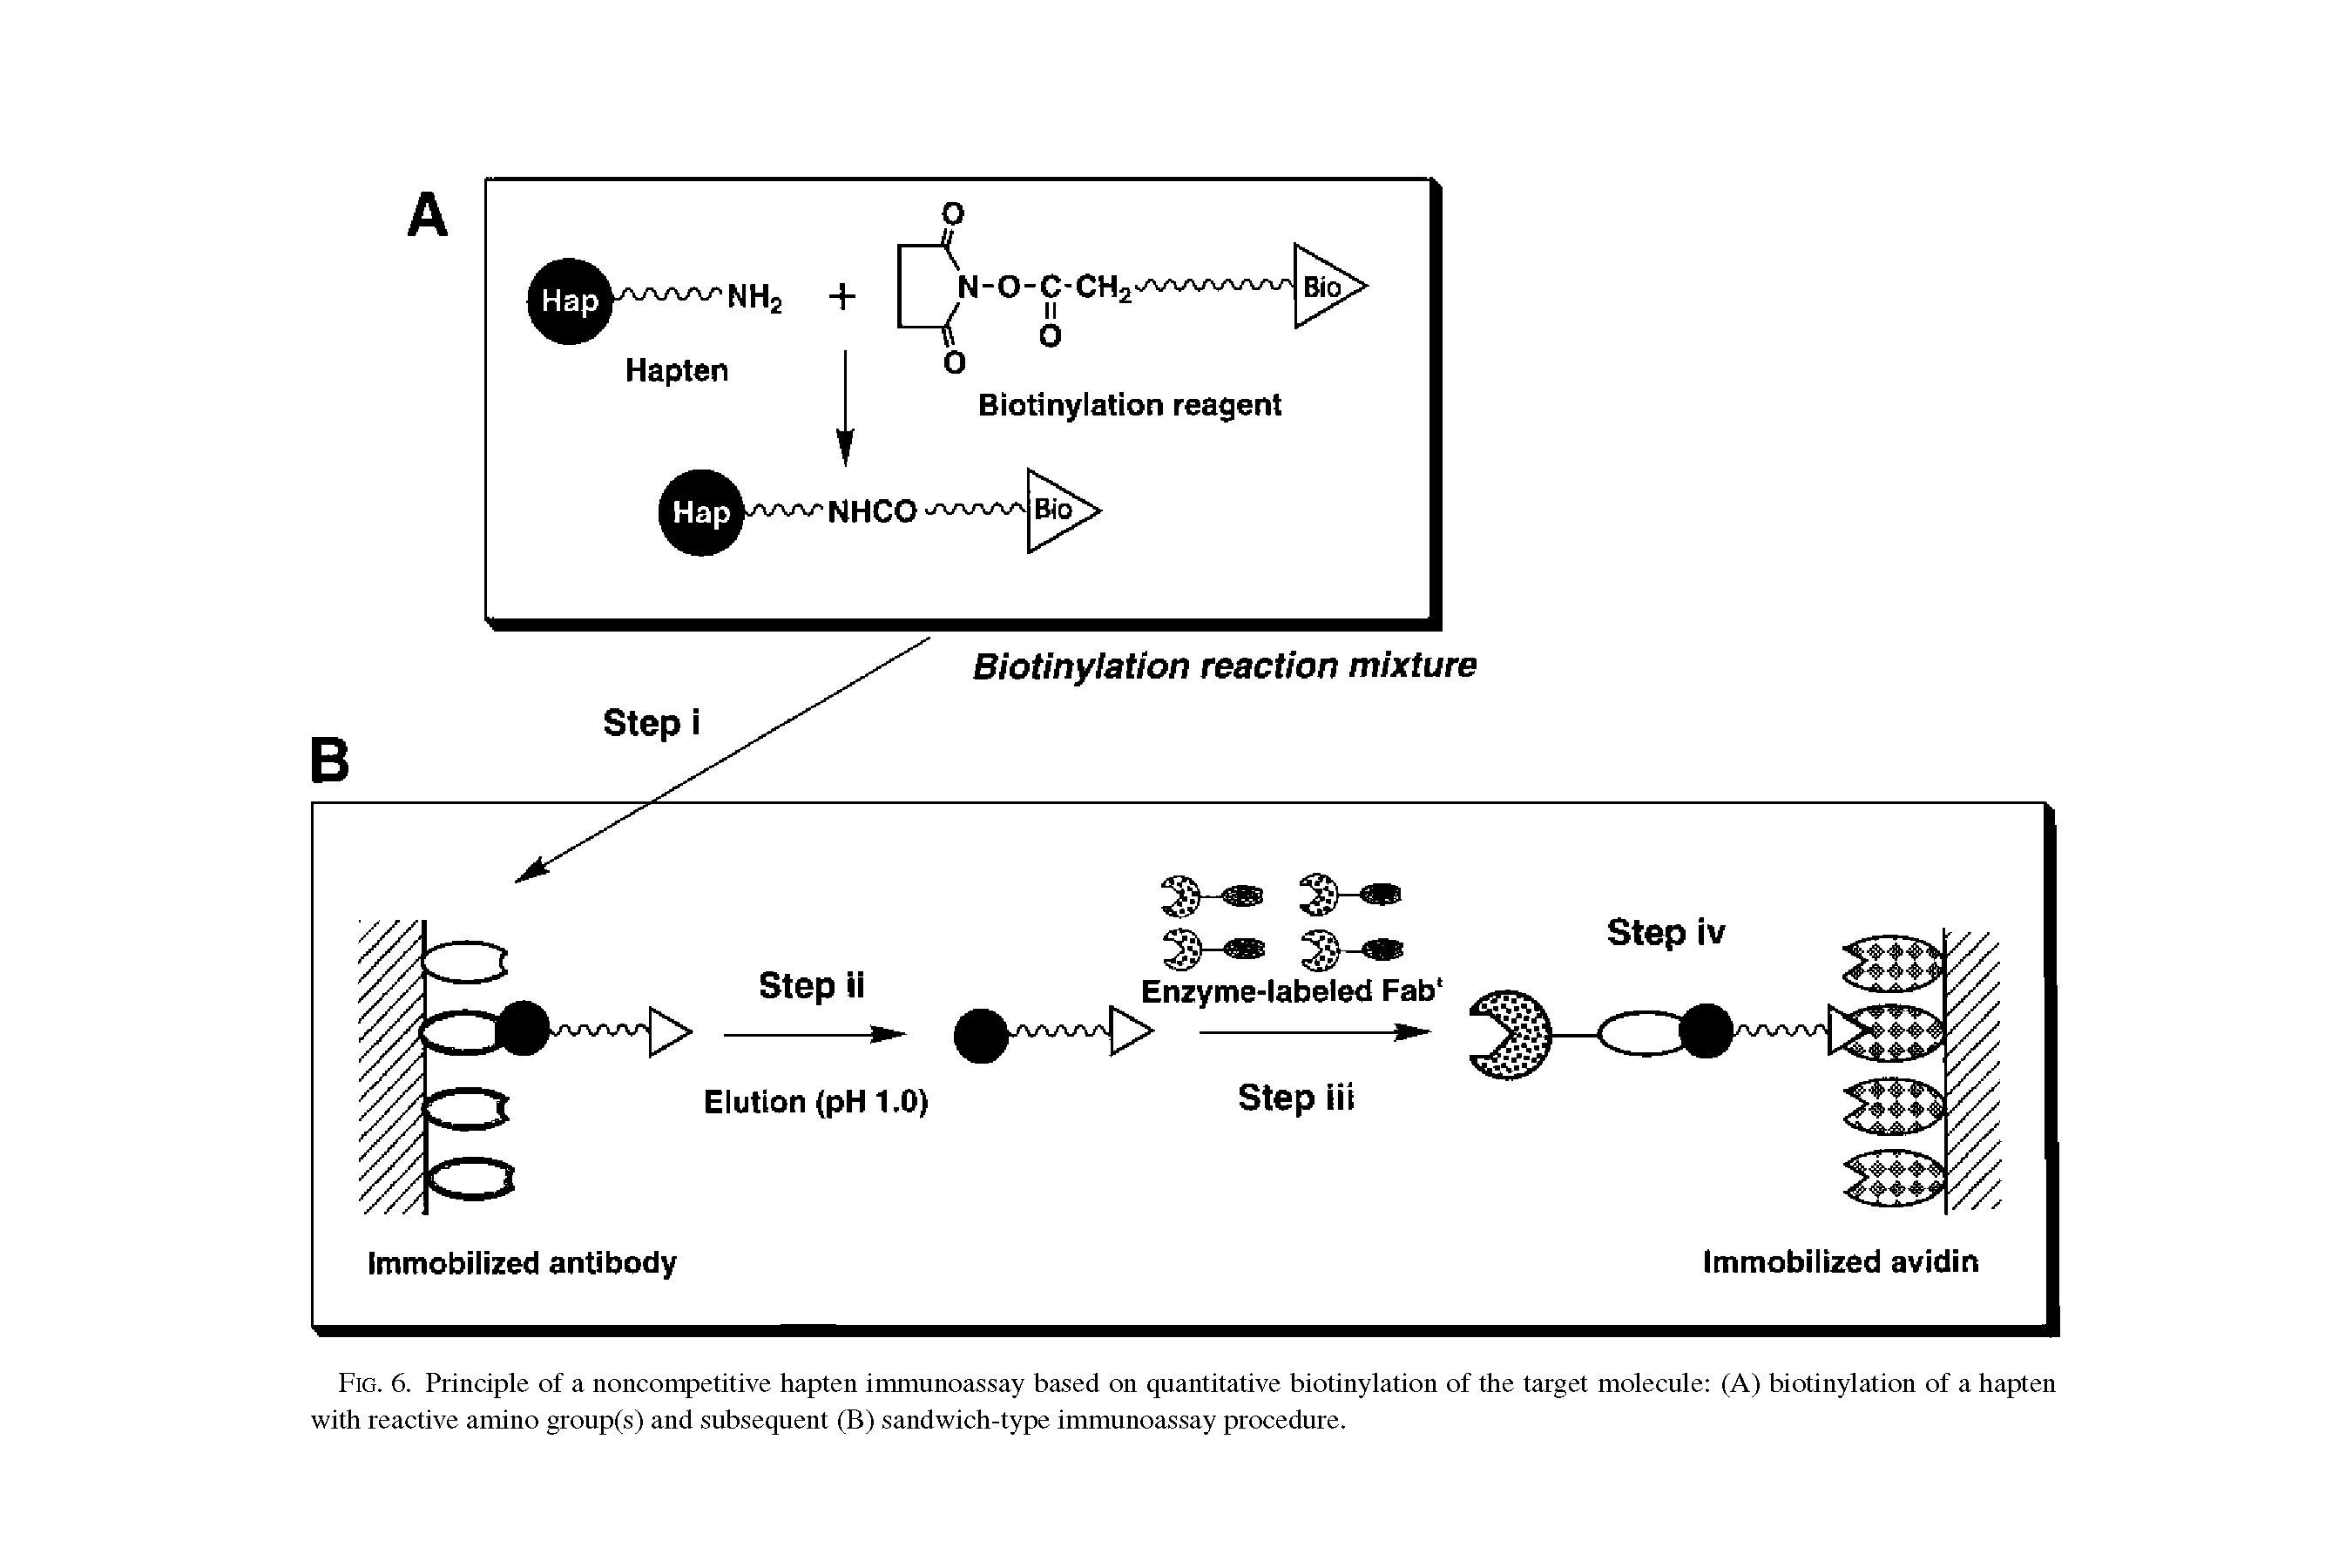 Fig. 6. Principle of a noncompetitive hapten immunoassay based on quantitative biotinylation of the target molecule (A) biotinylation of a hapten with reactive amino group(s) and subsequent (B) sandwich-type immunoassay procedure.